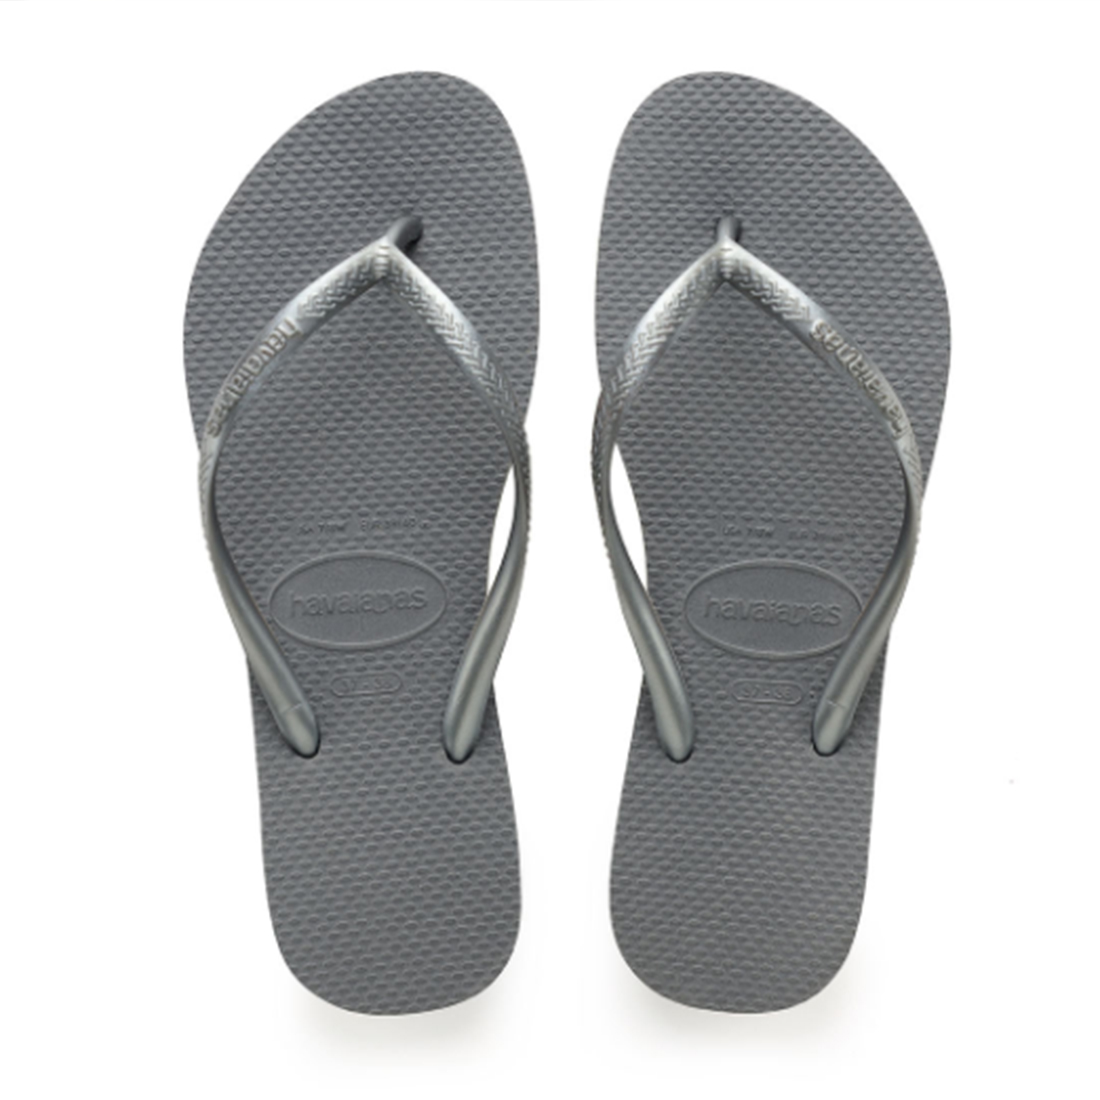 Havaianas Slim Sandals In Steel Gray 81407